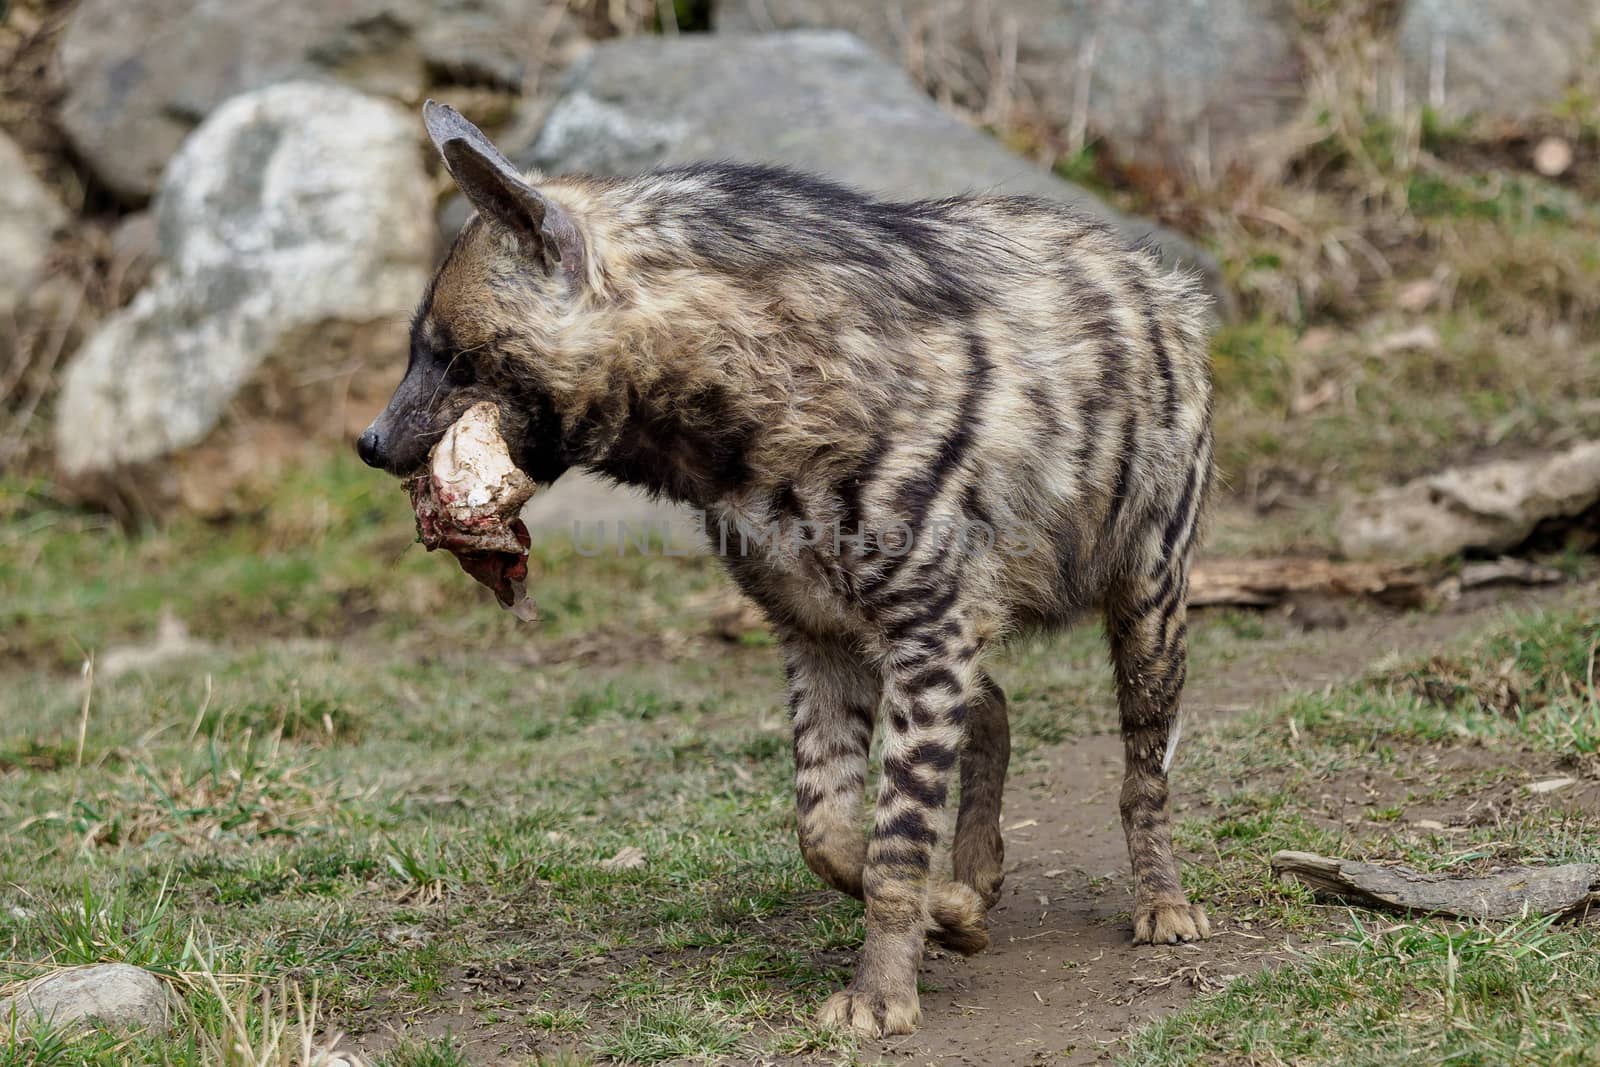 A wounded hyena. Striped hyena (Hyaena hyaena sultana) by xtrekx